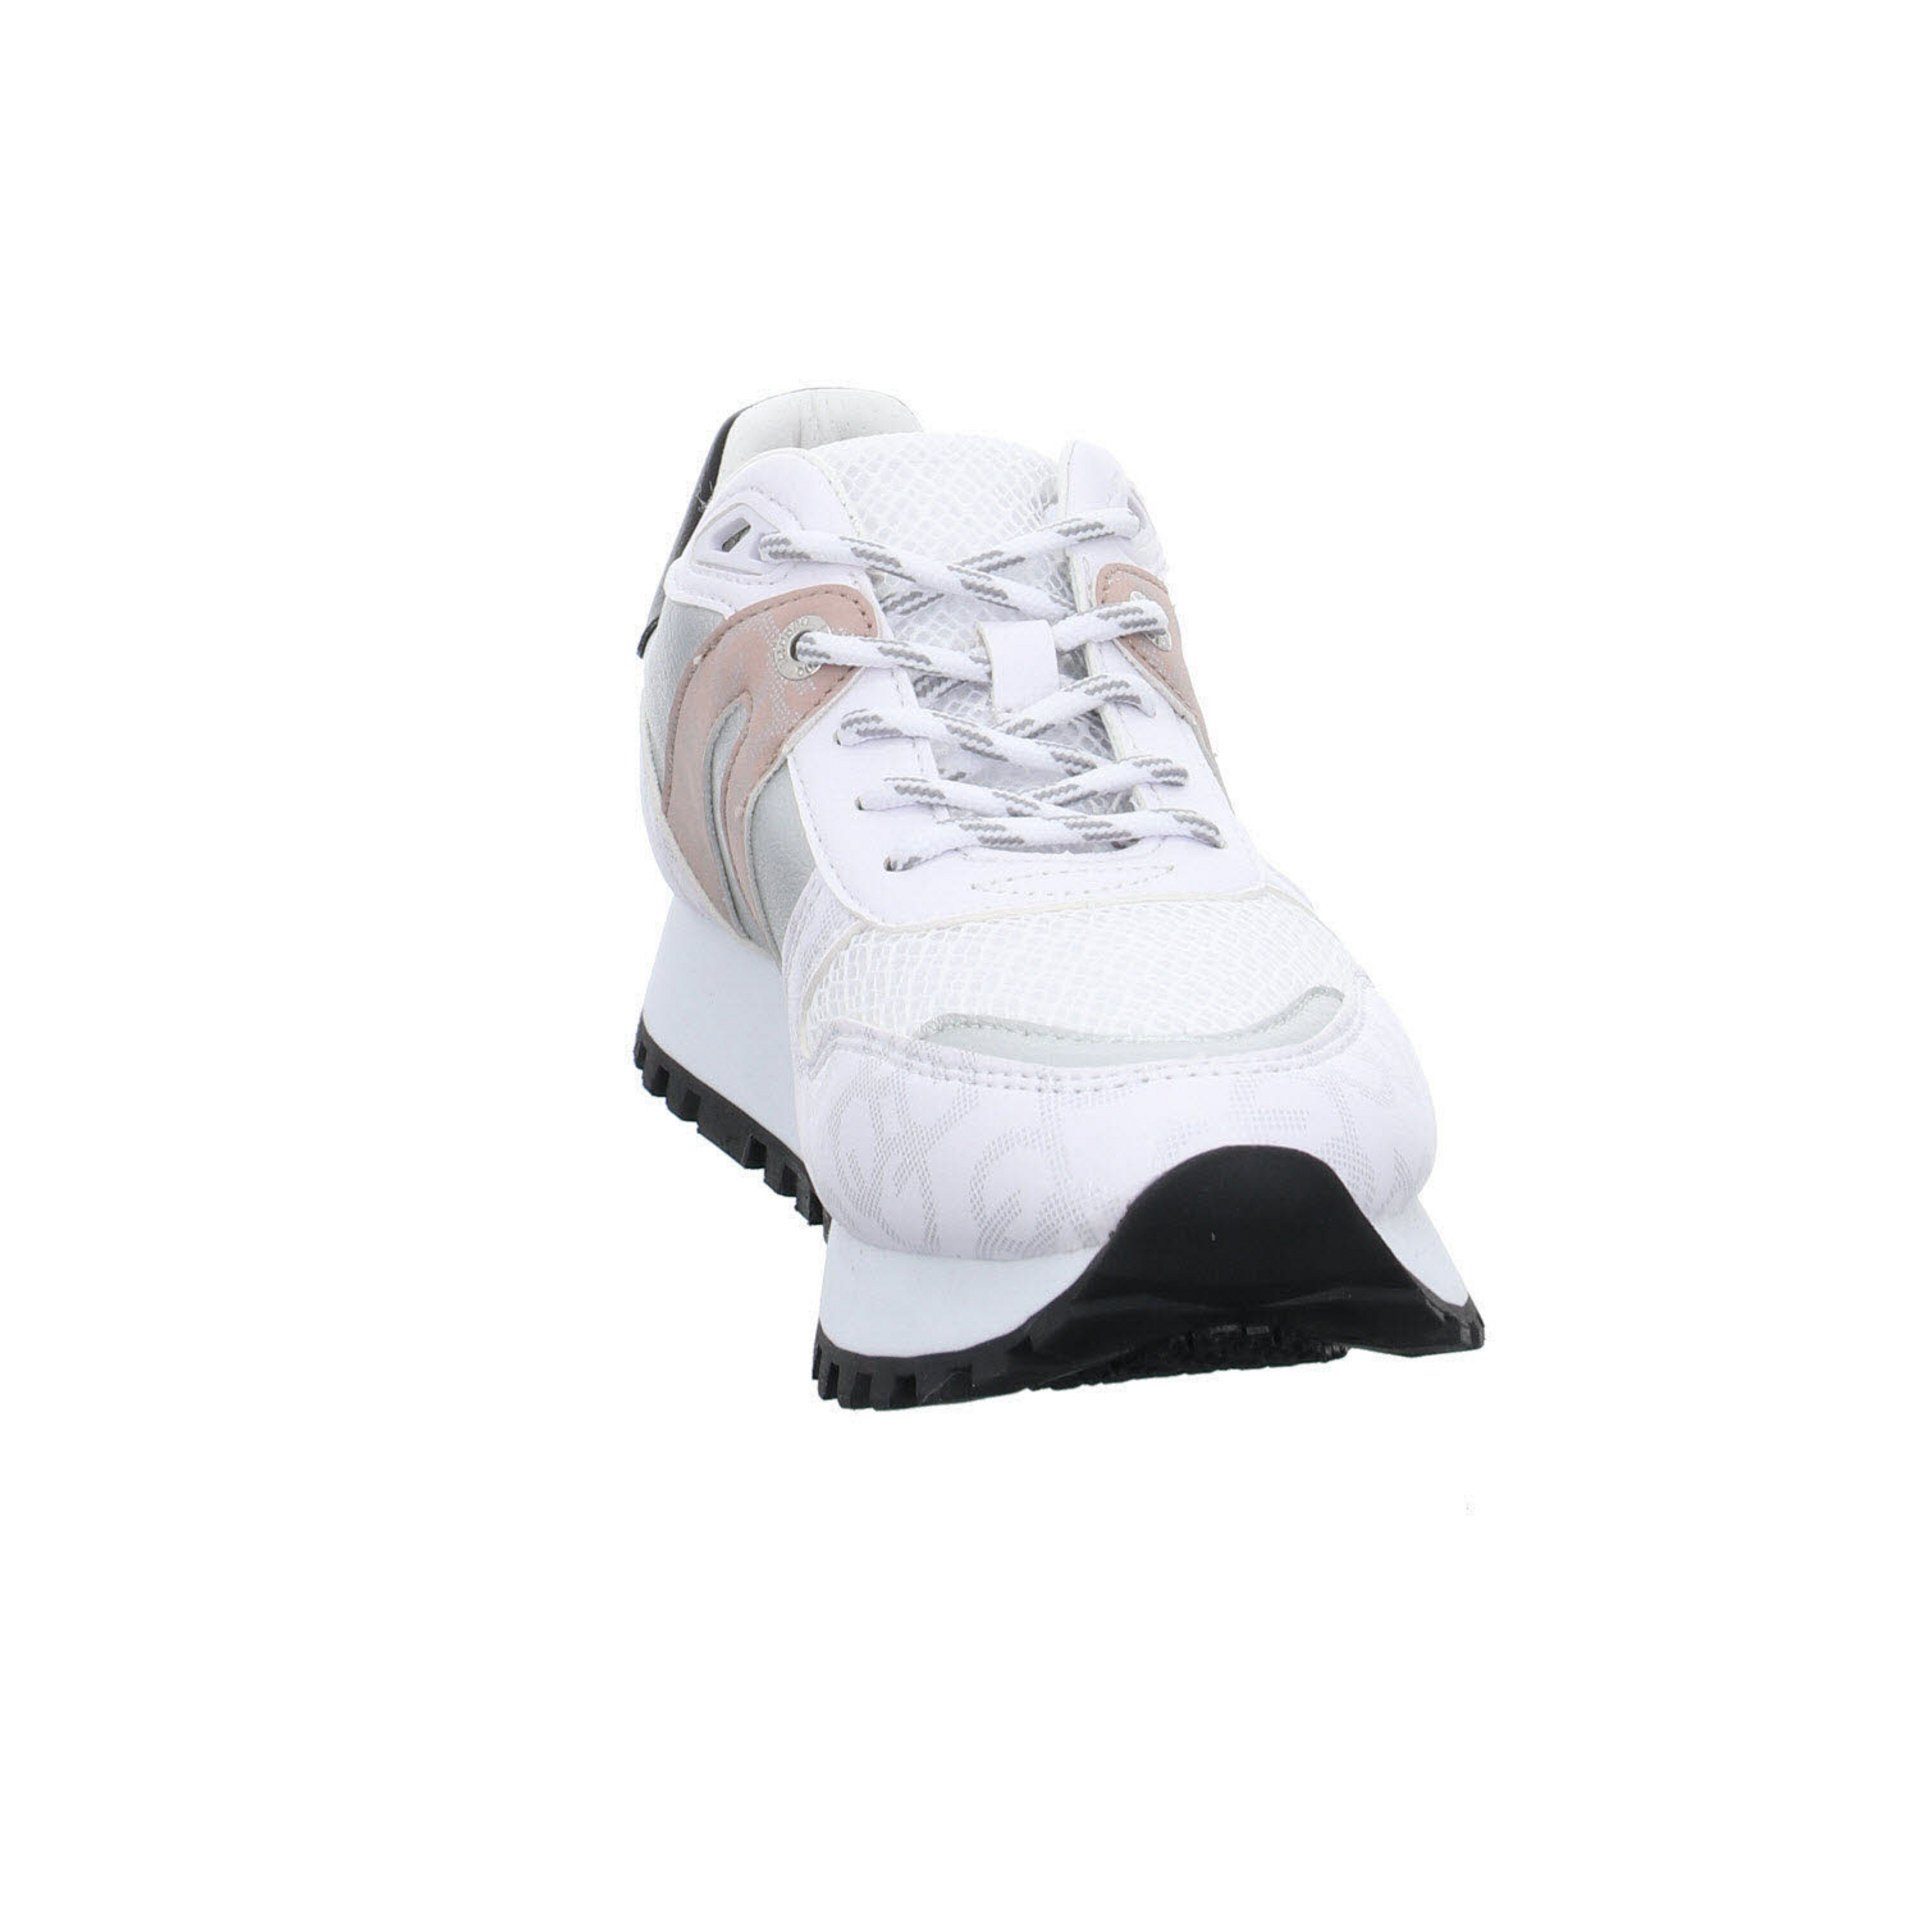 bugatti Damen Sneaker Schuhe Schnürschuh Sneaker / Siena white silver Leder-/Textilkombination